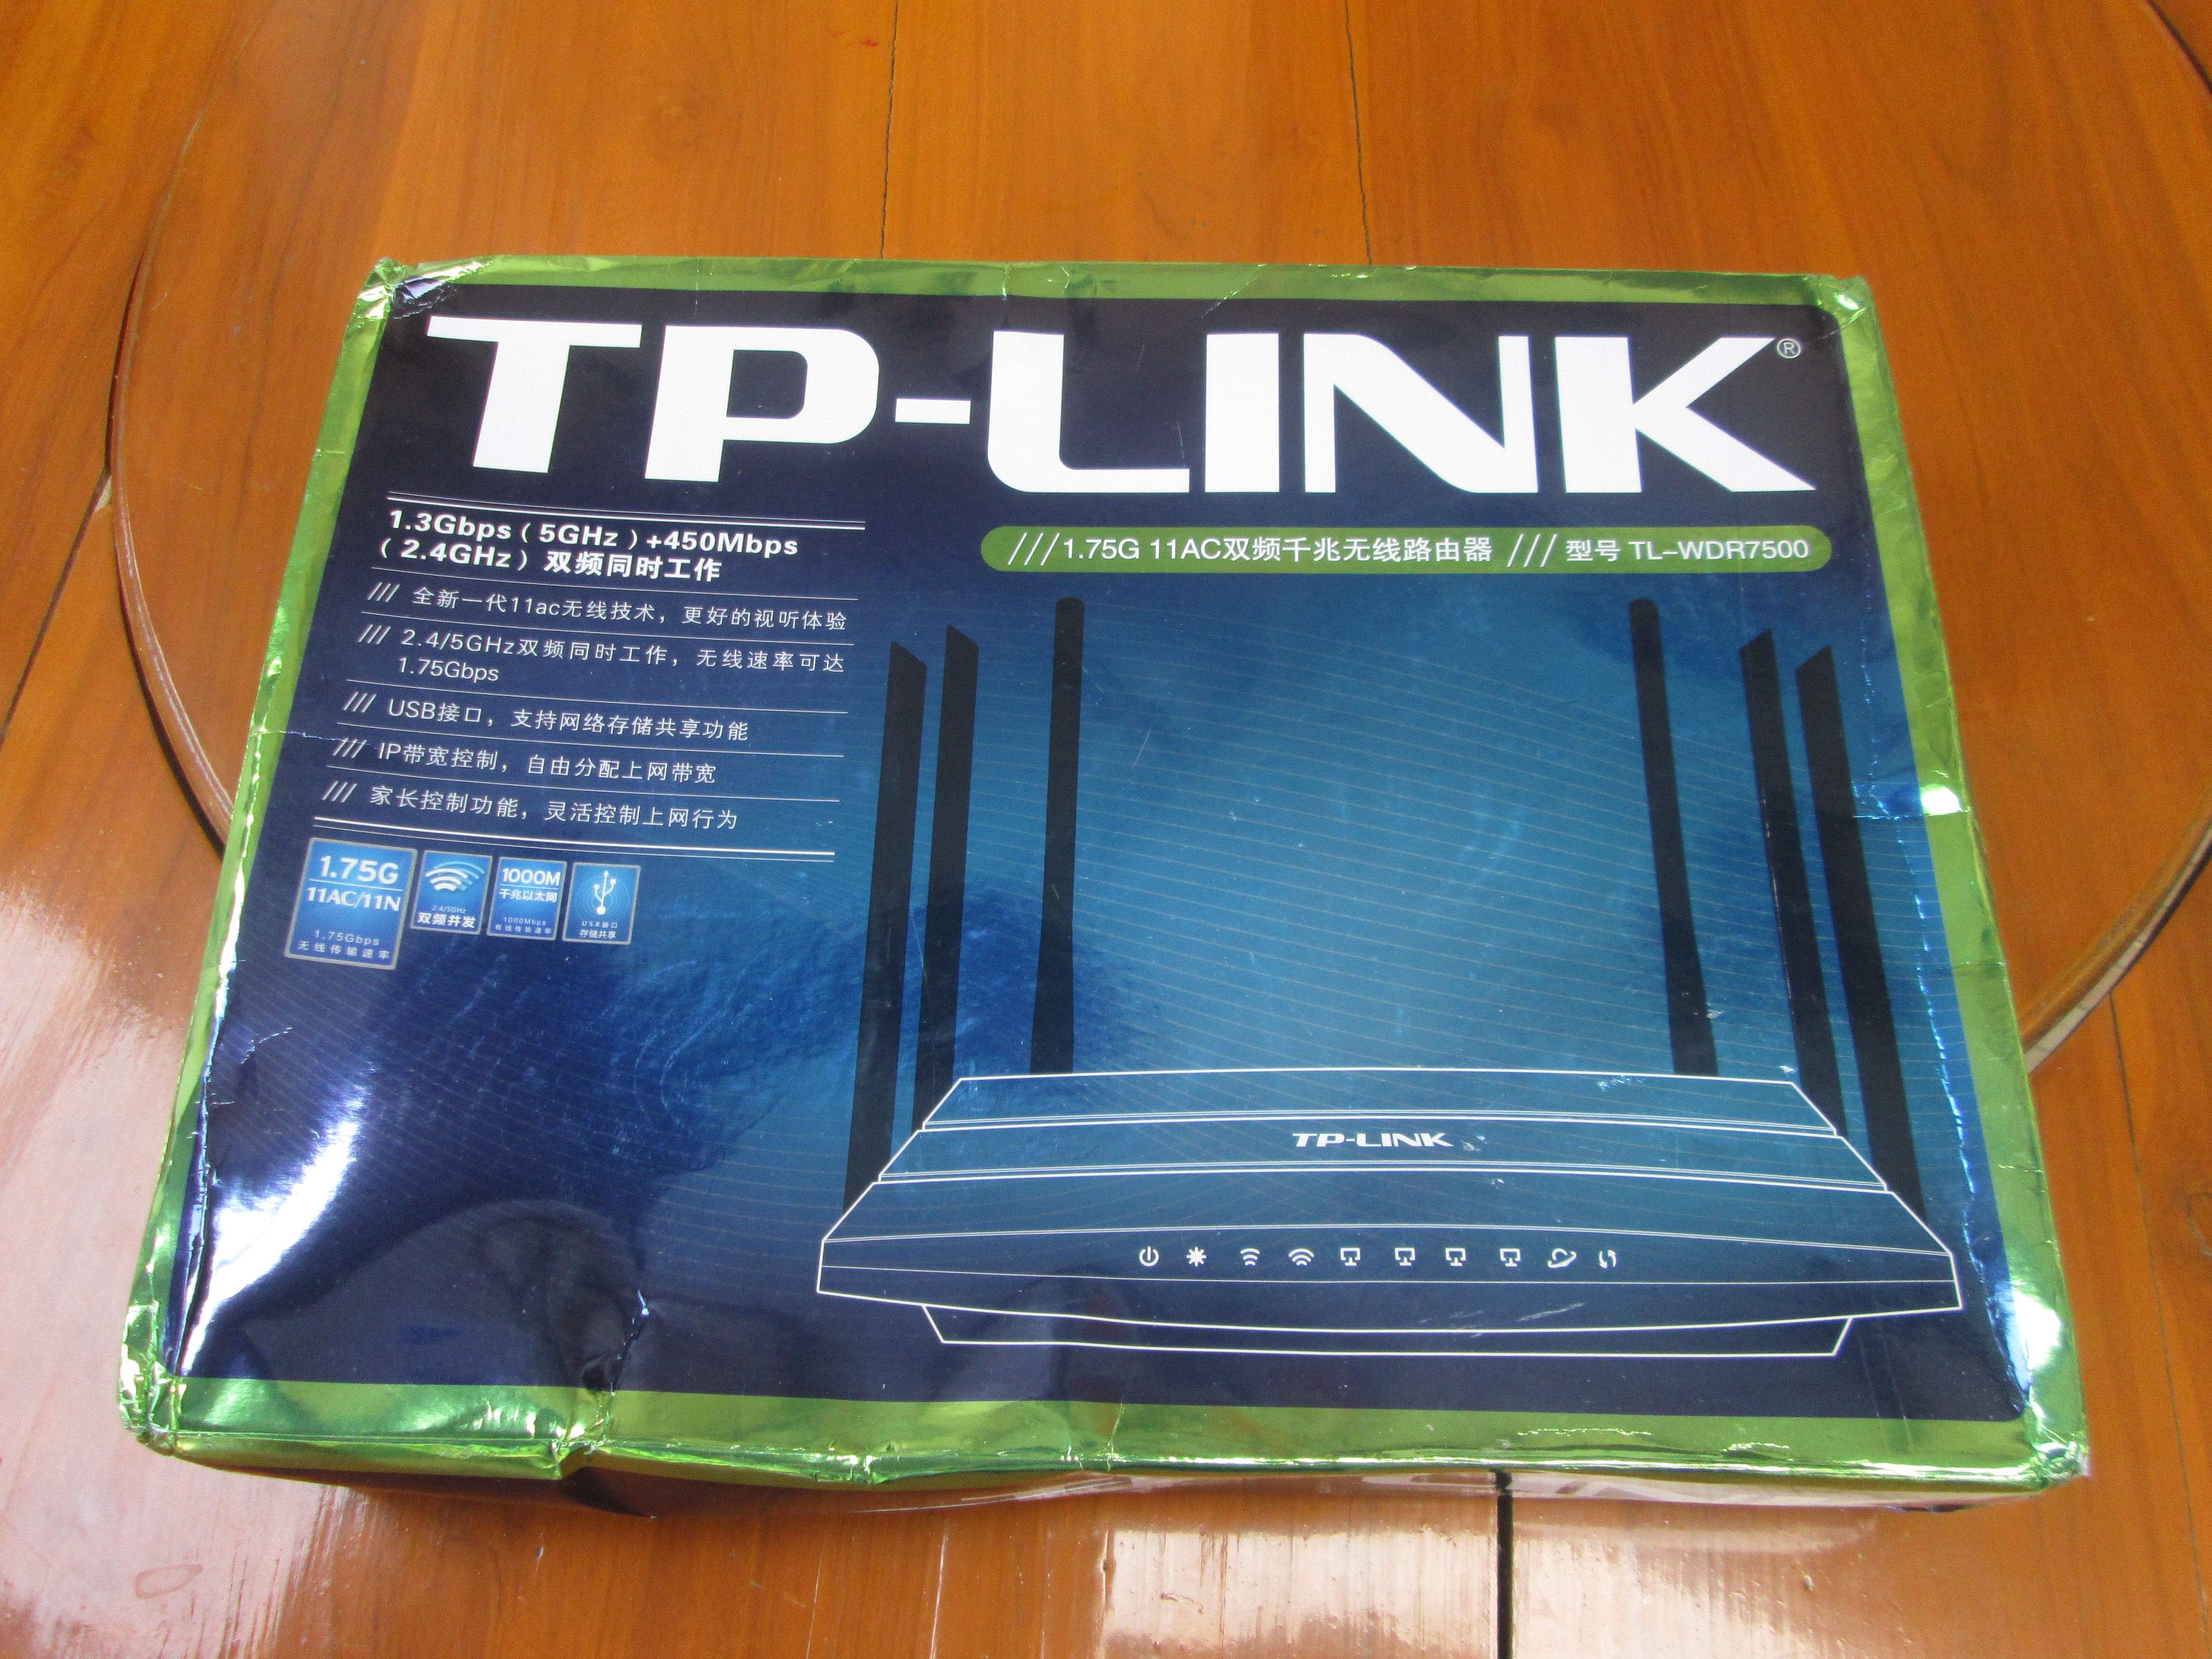 TP-LINK Archer C7 AC1750 Dual Band Wireless AC Gigabit Router, 2.4GHz  450Mbps+5G